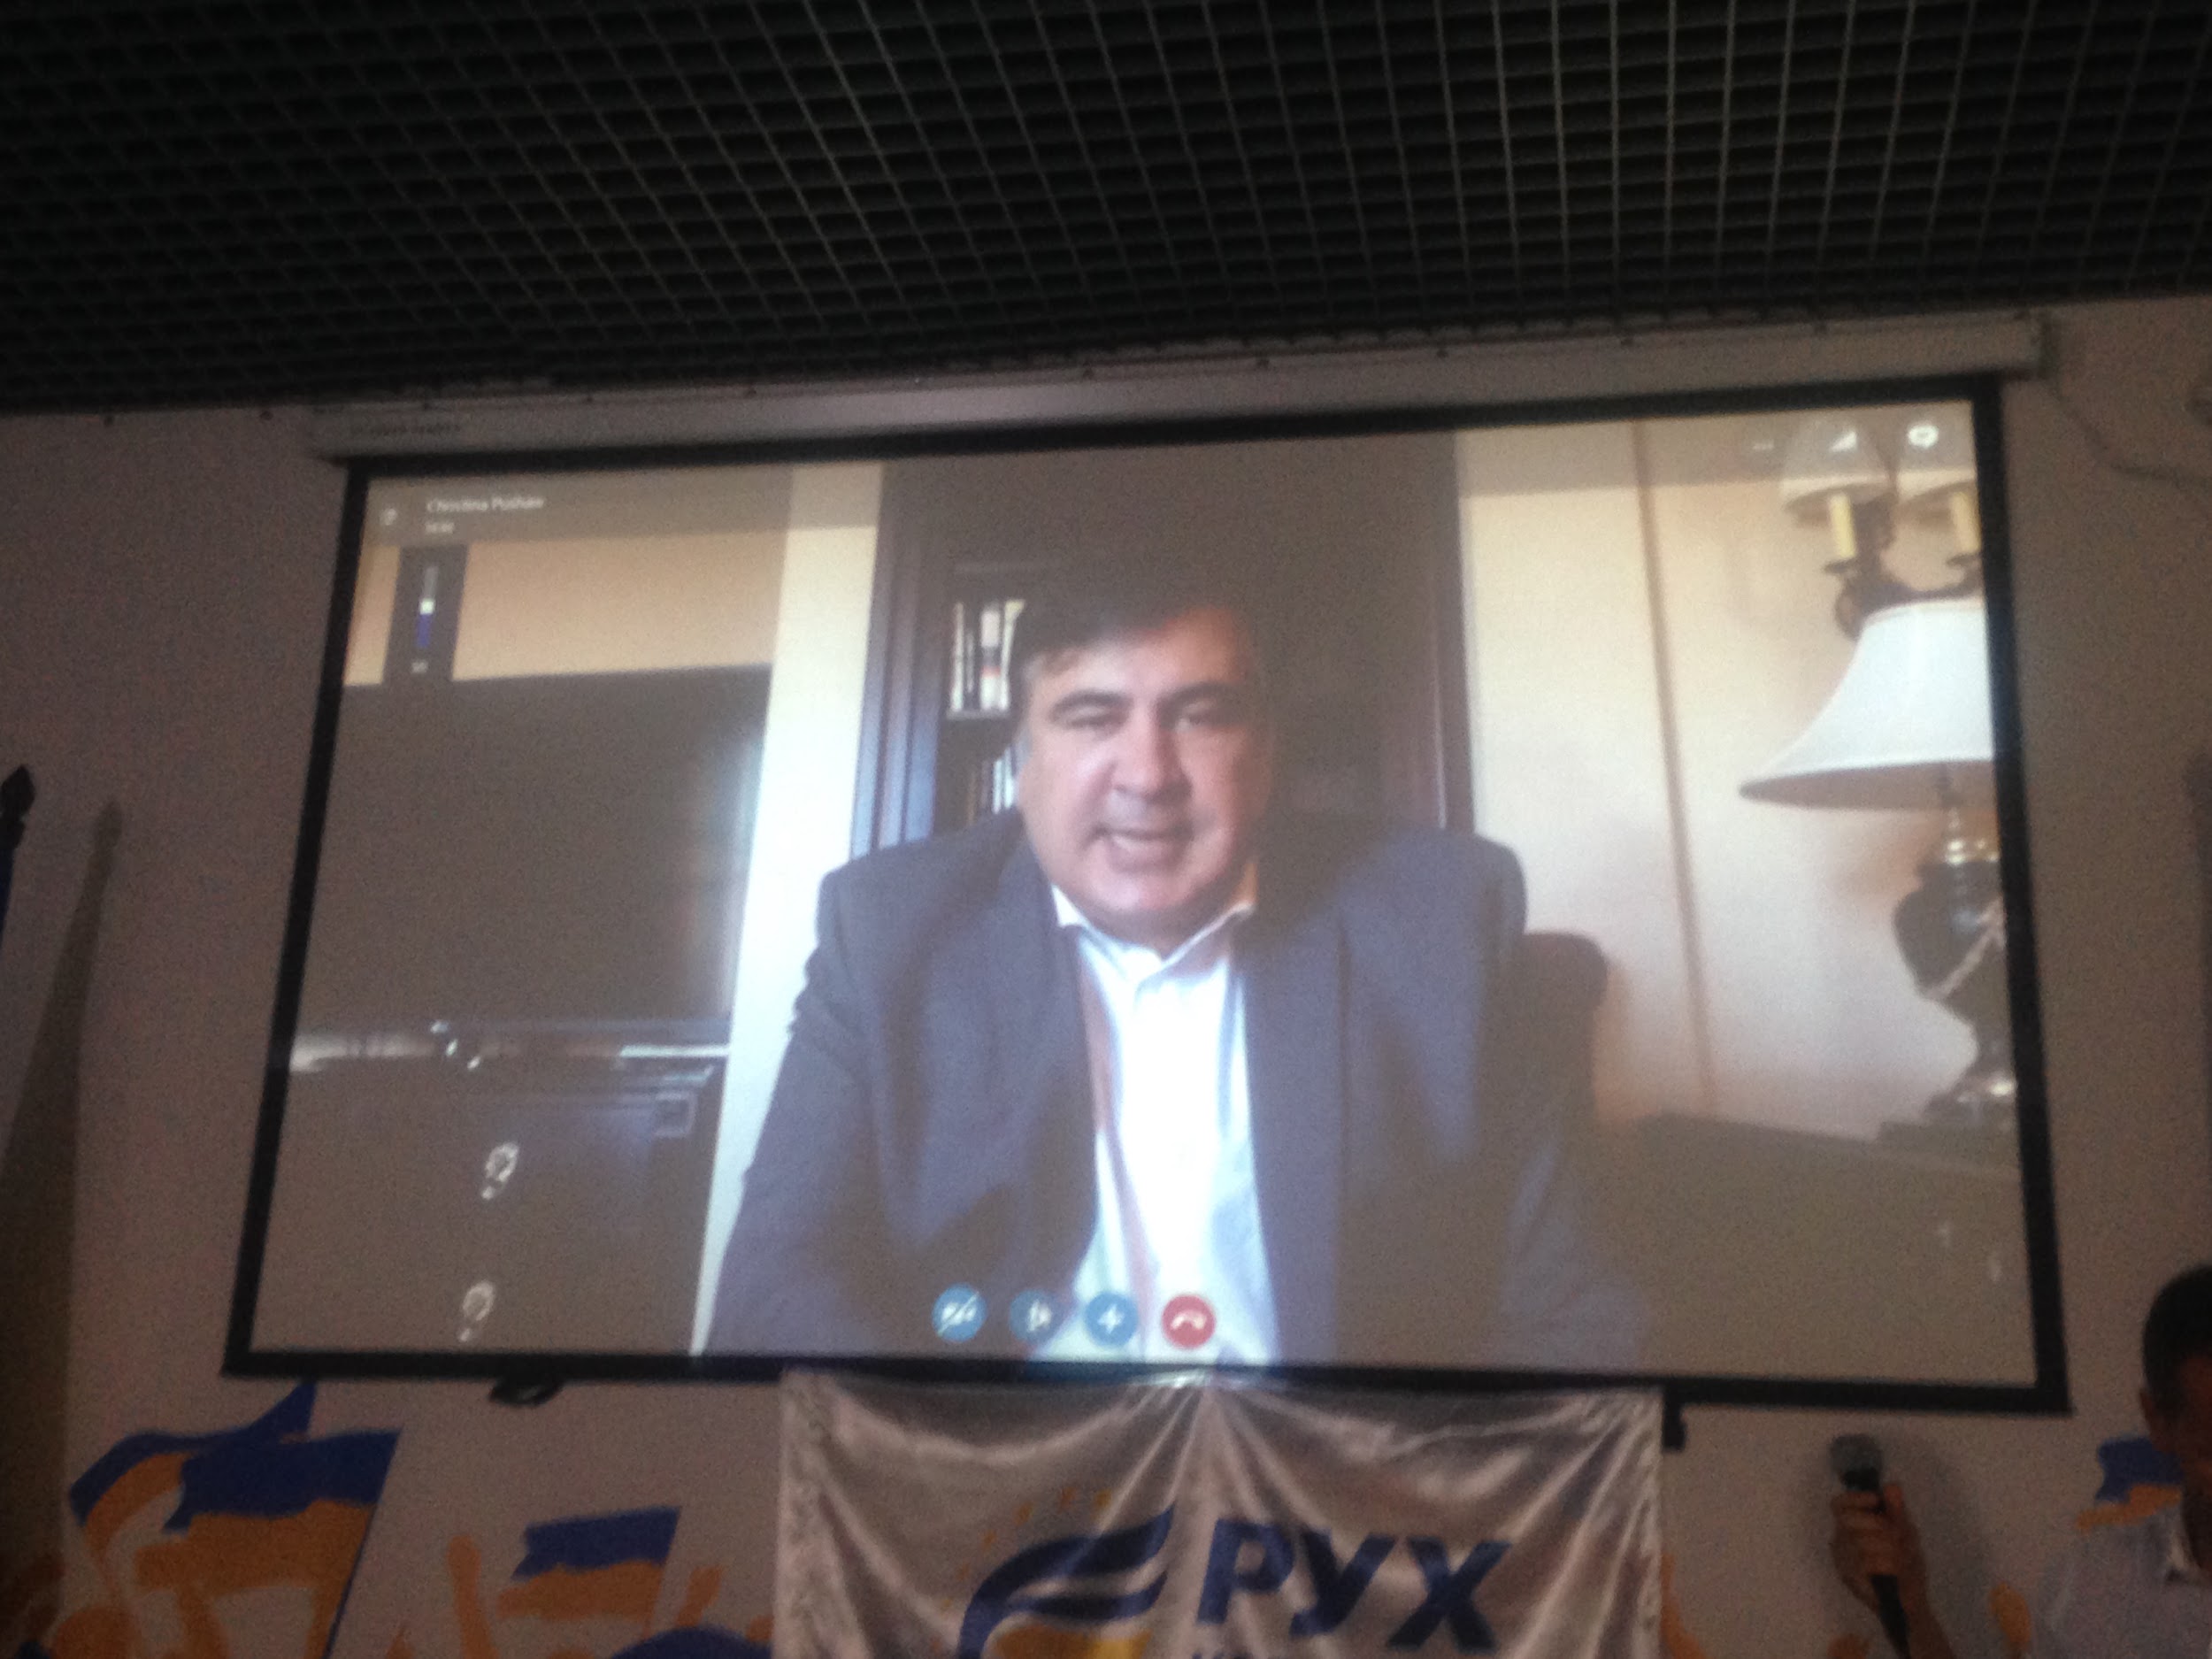 Saakashvili during the press conference ~